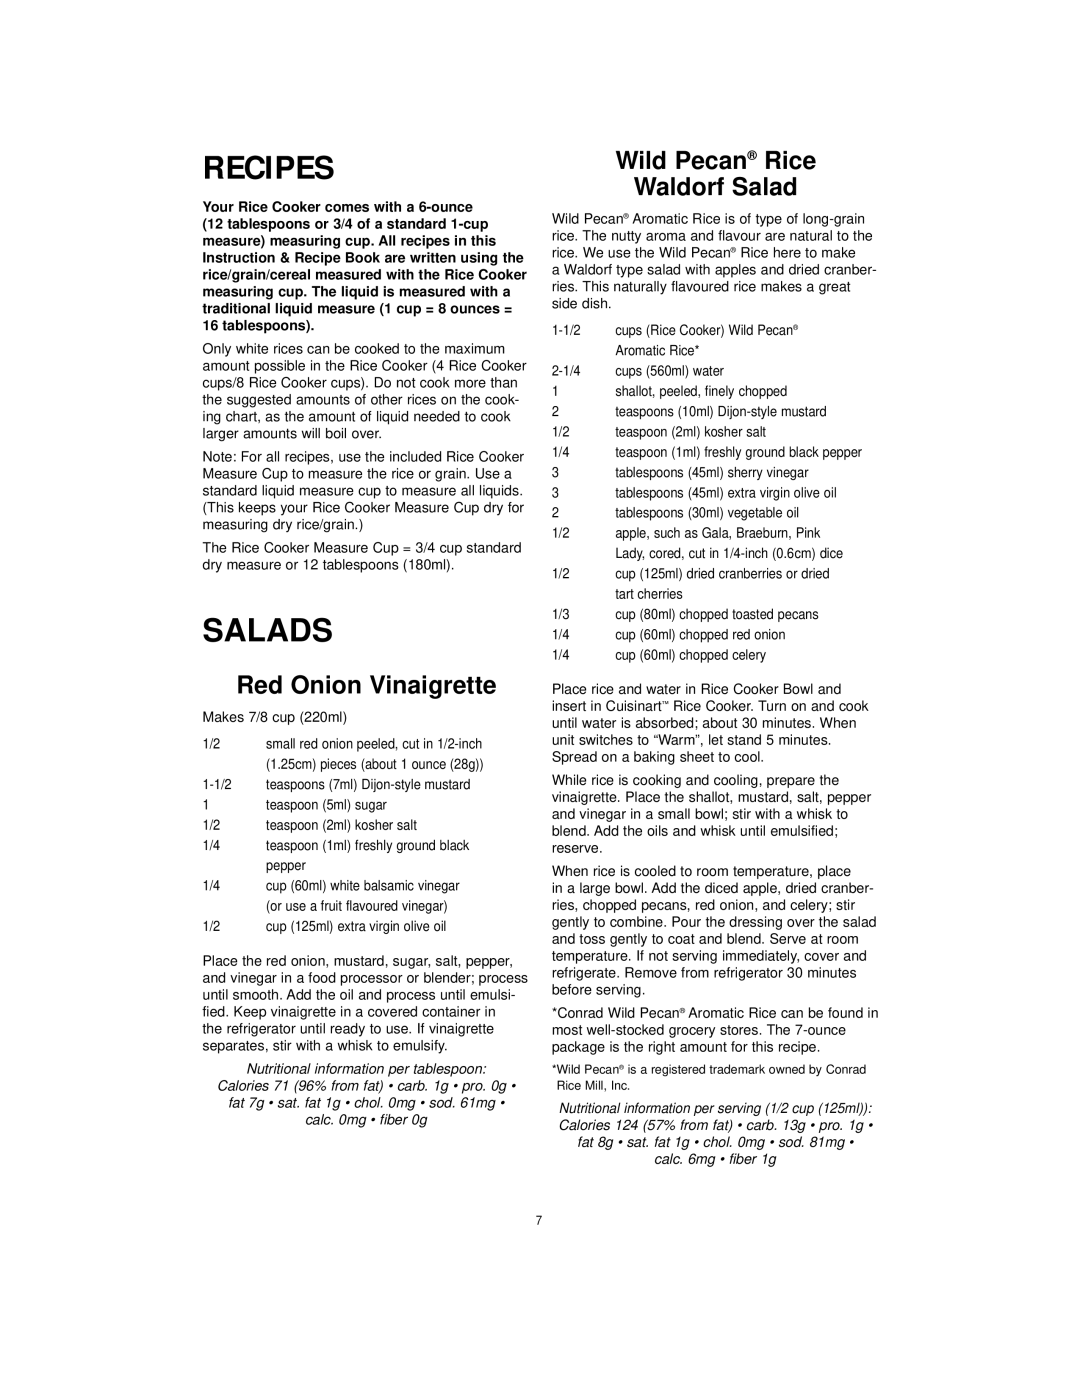 Cuisinart CRC-400C manual Recipes, Salads, Red Onion Vinaigrette, Wild Pecan Rice Waldorf Salad 